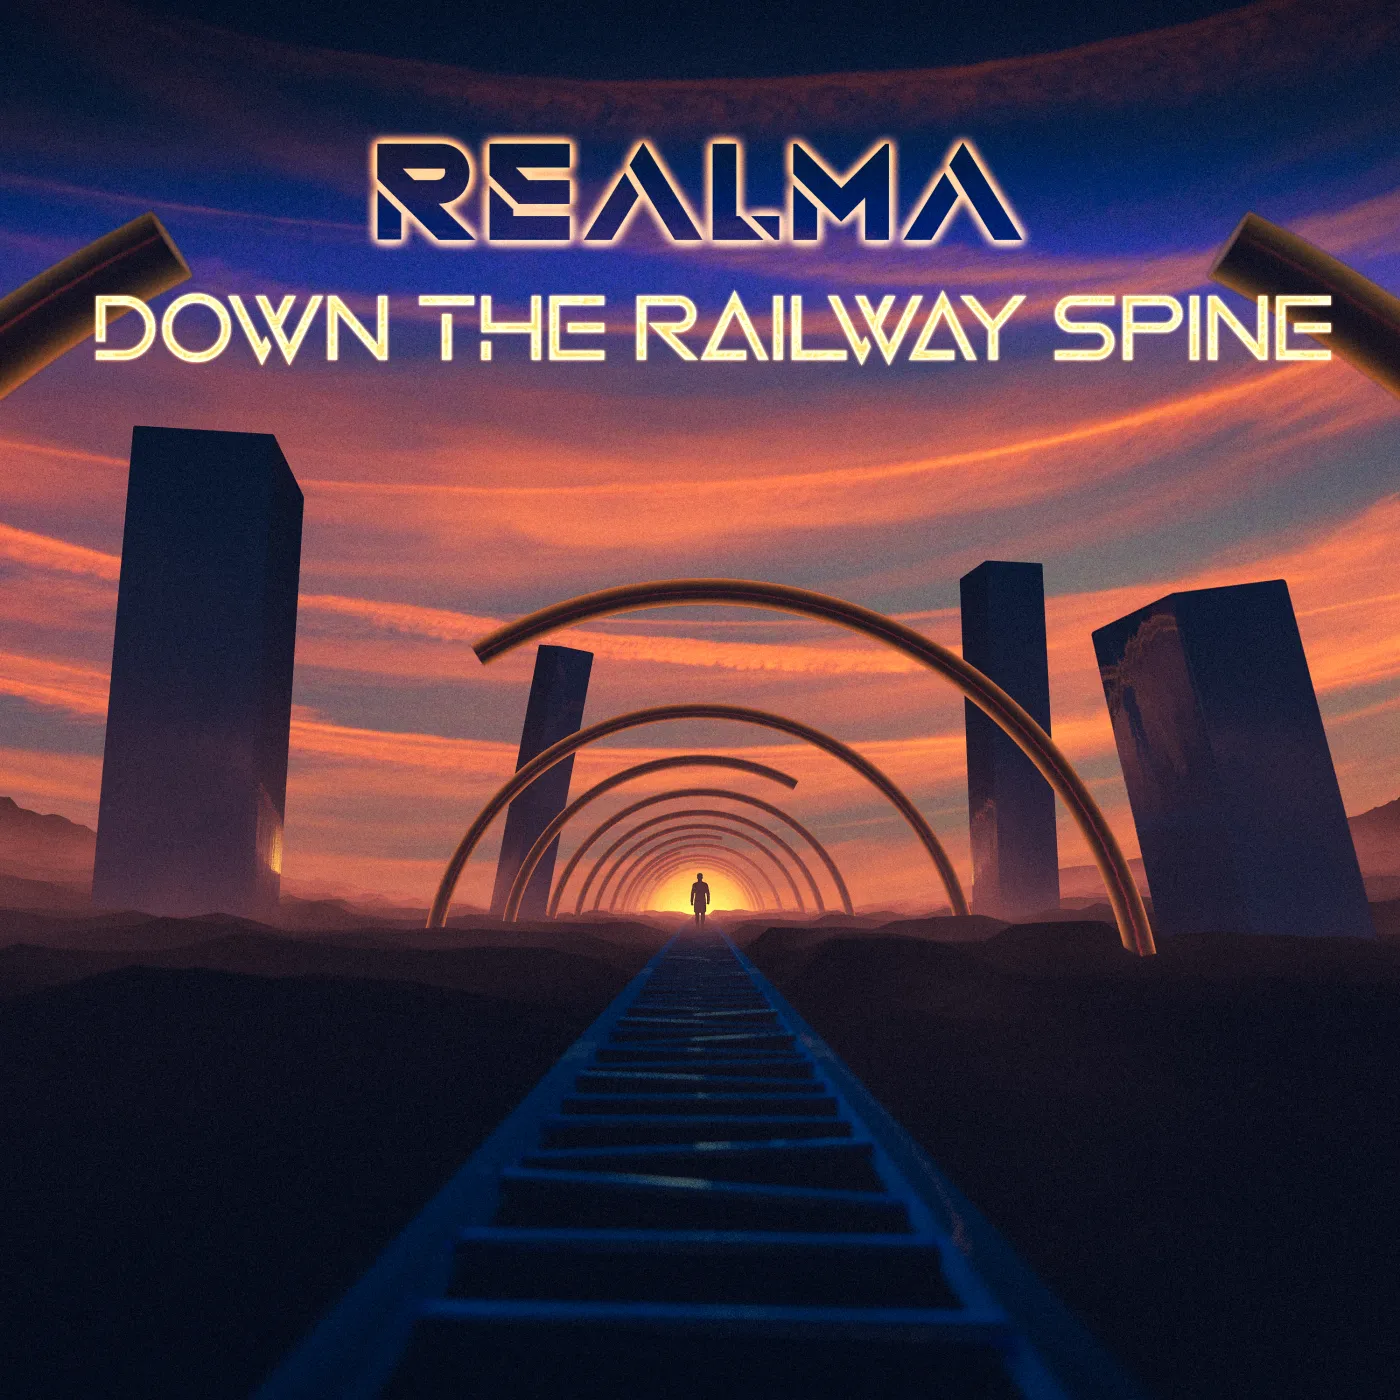 Realma – “Down the Railway Spine”